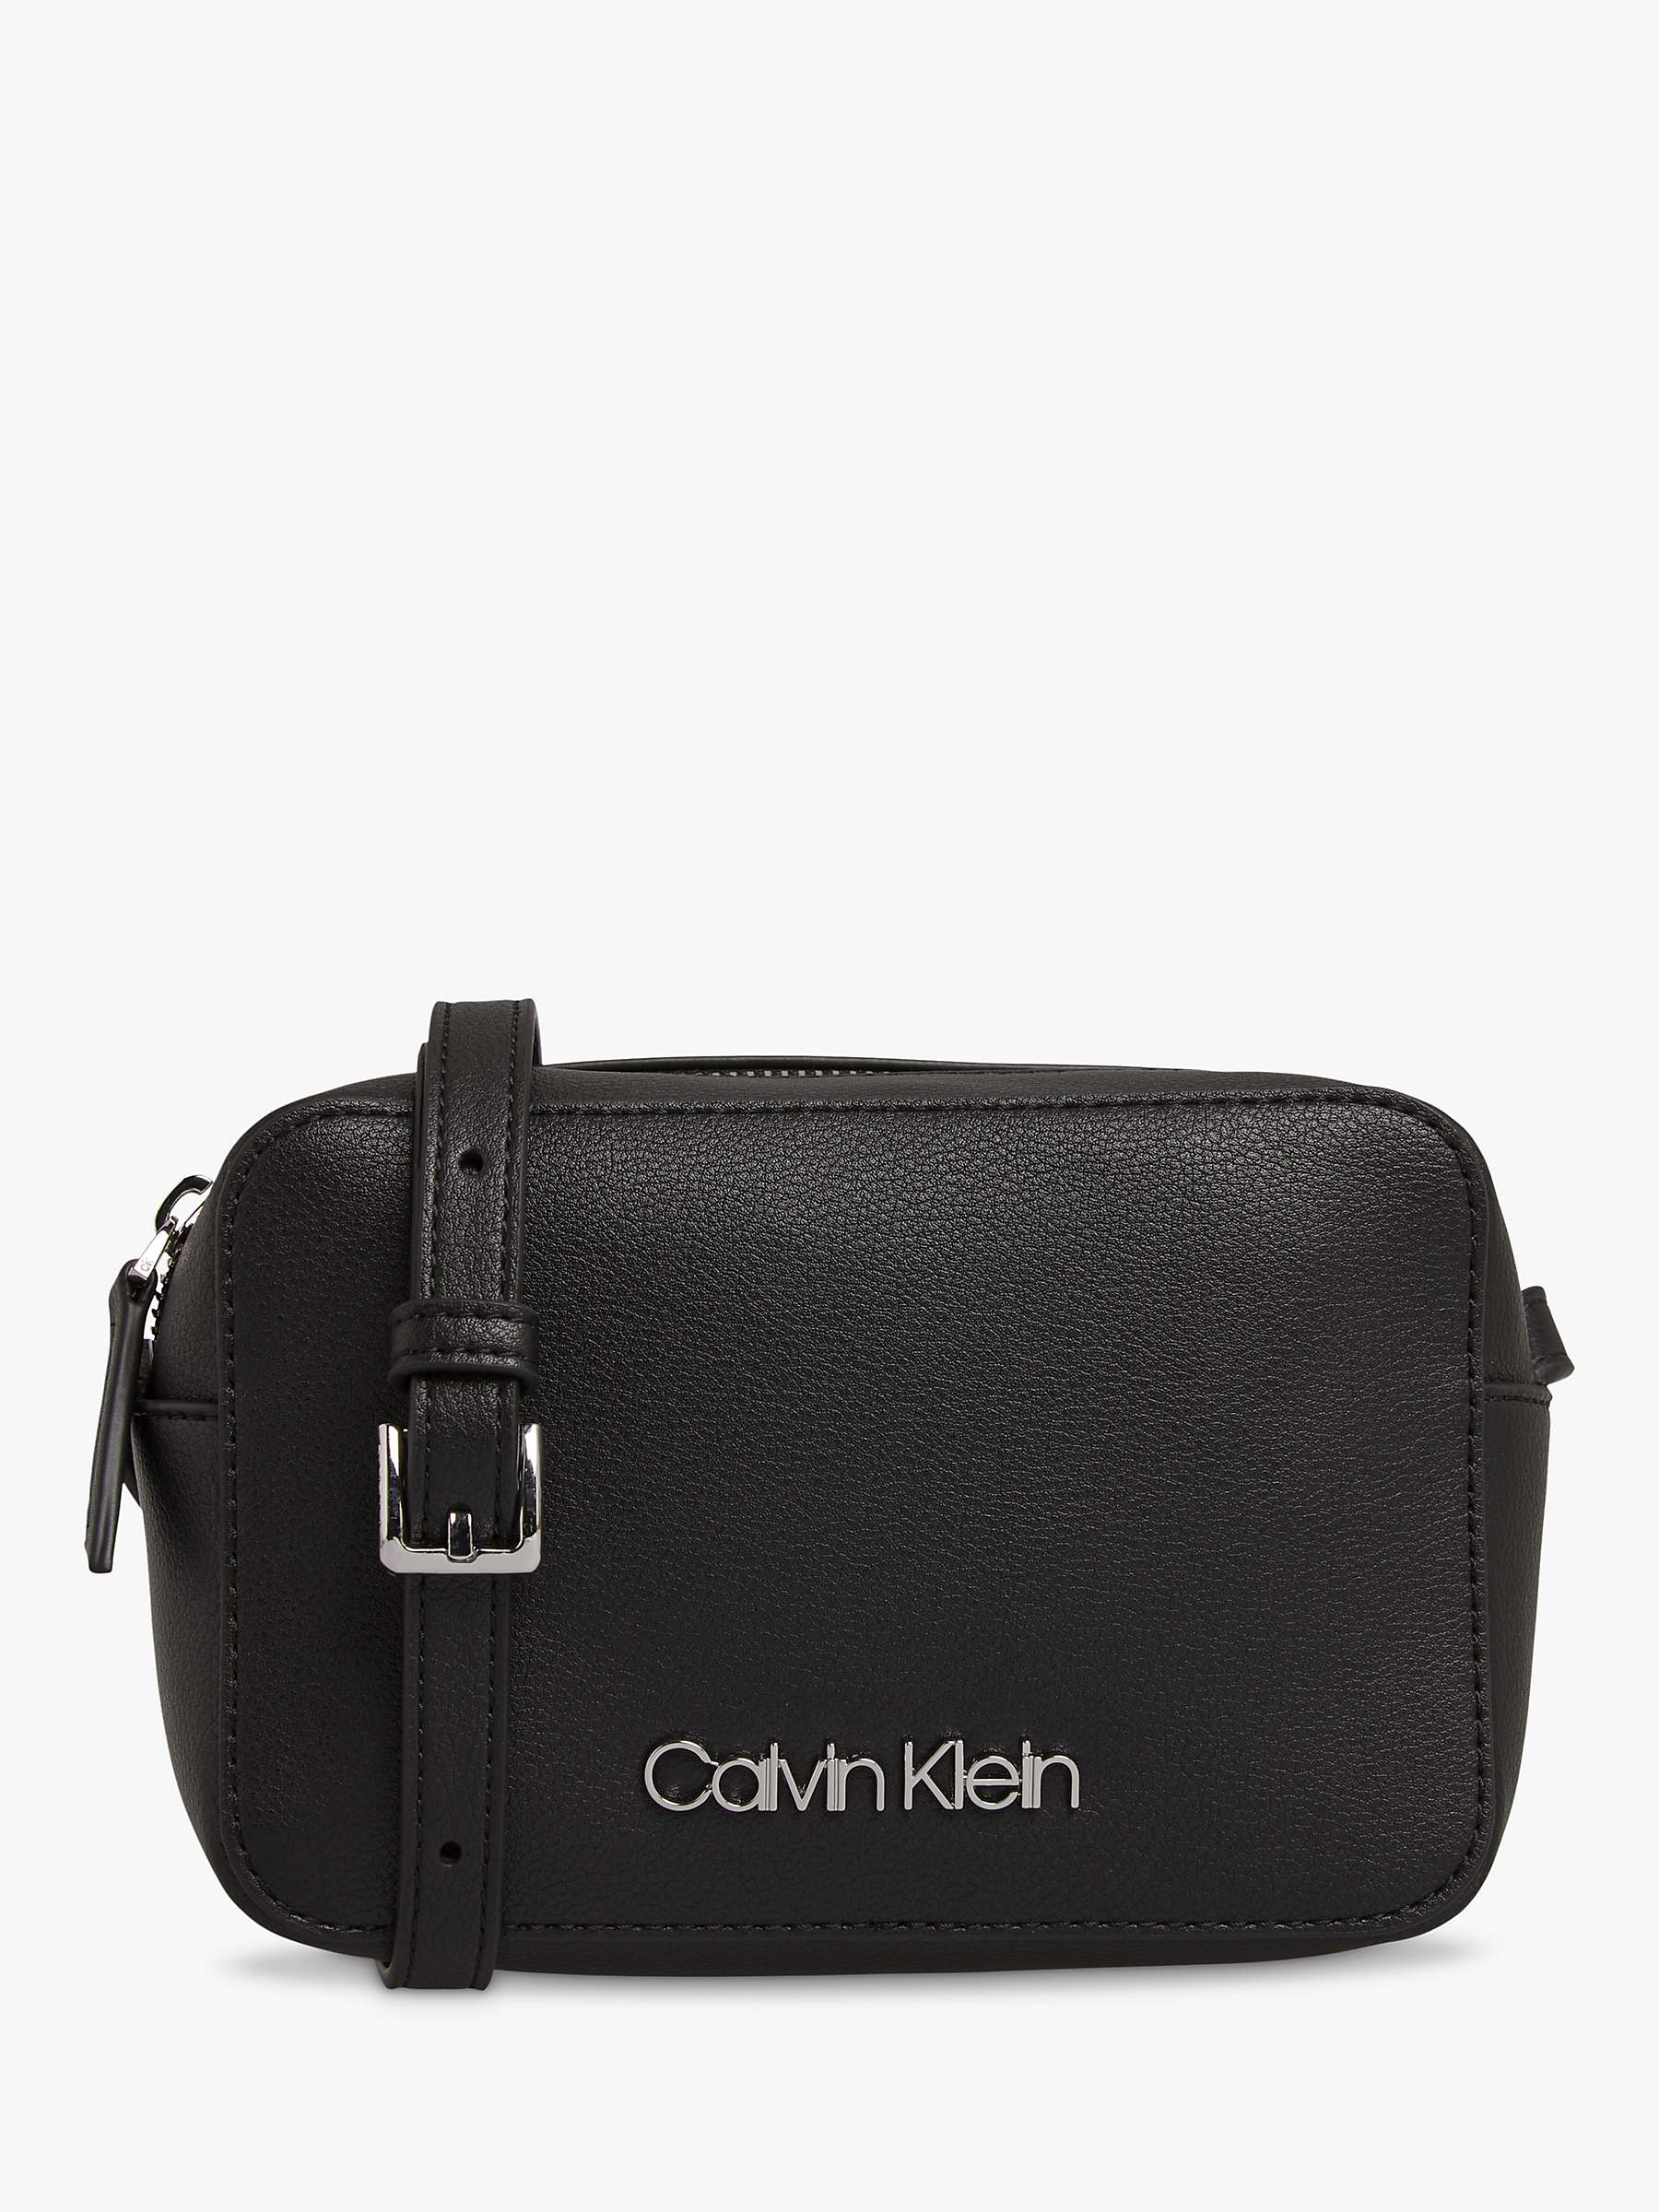 Buy Calvin Klein Camera Bag Online at johnlewis.com